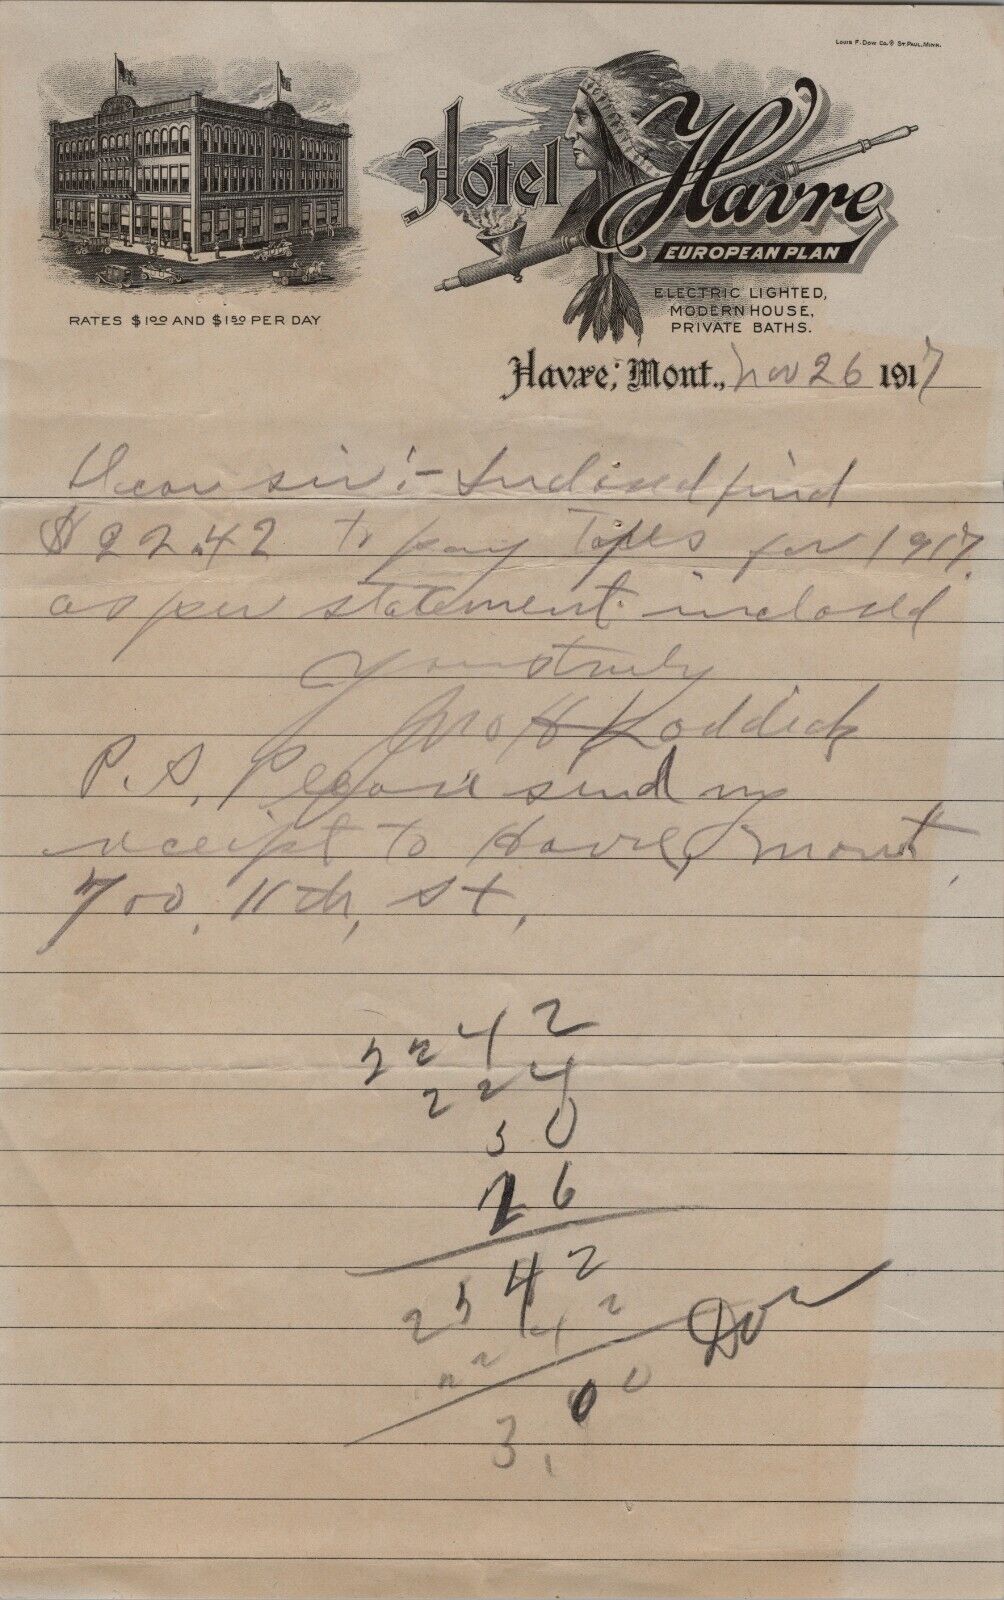 1917 Harve Hotel, Montana Handwritten Letter Regarding Funds Due